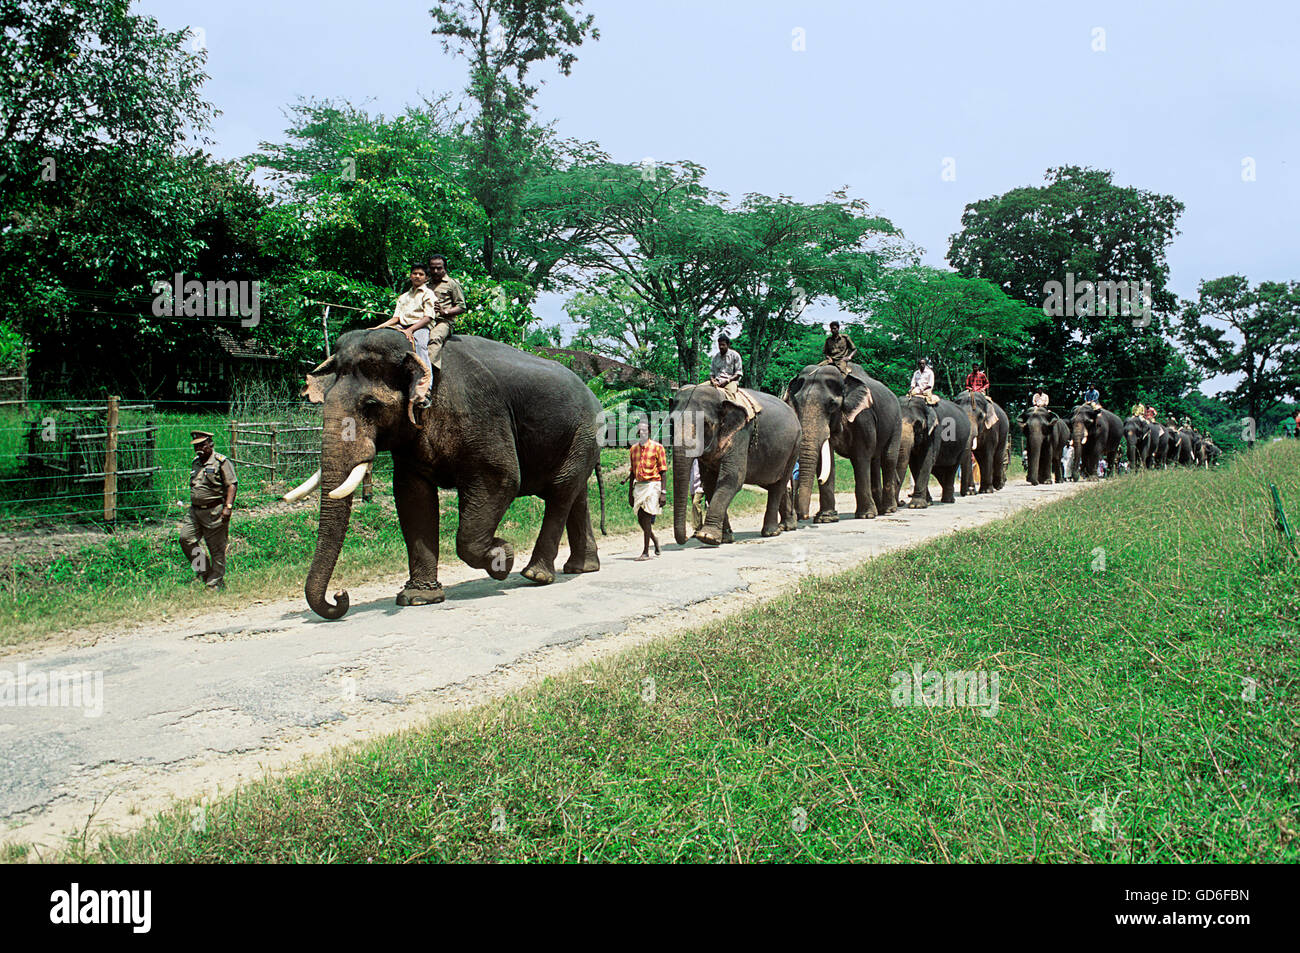 Camp elephants Stock Photo